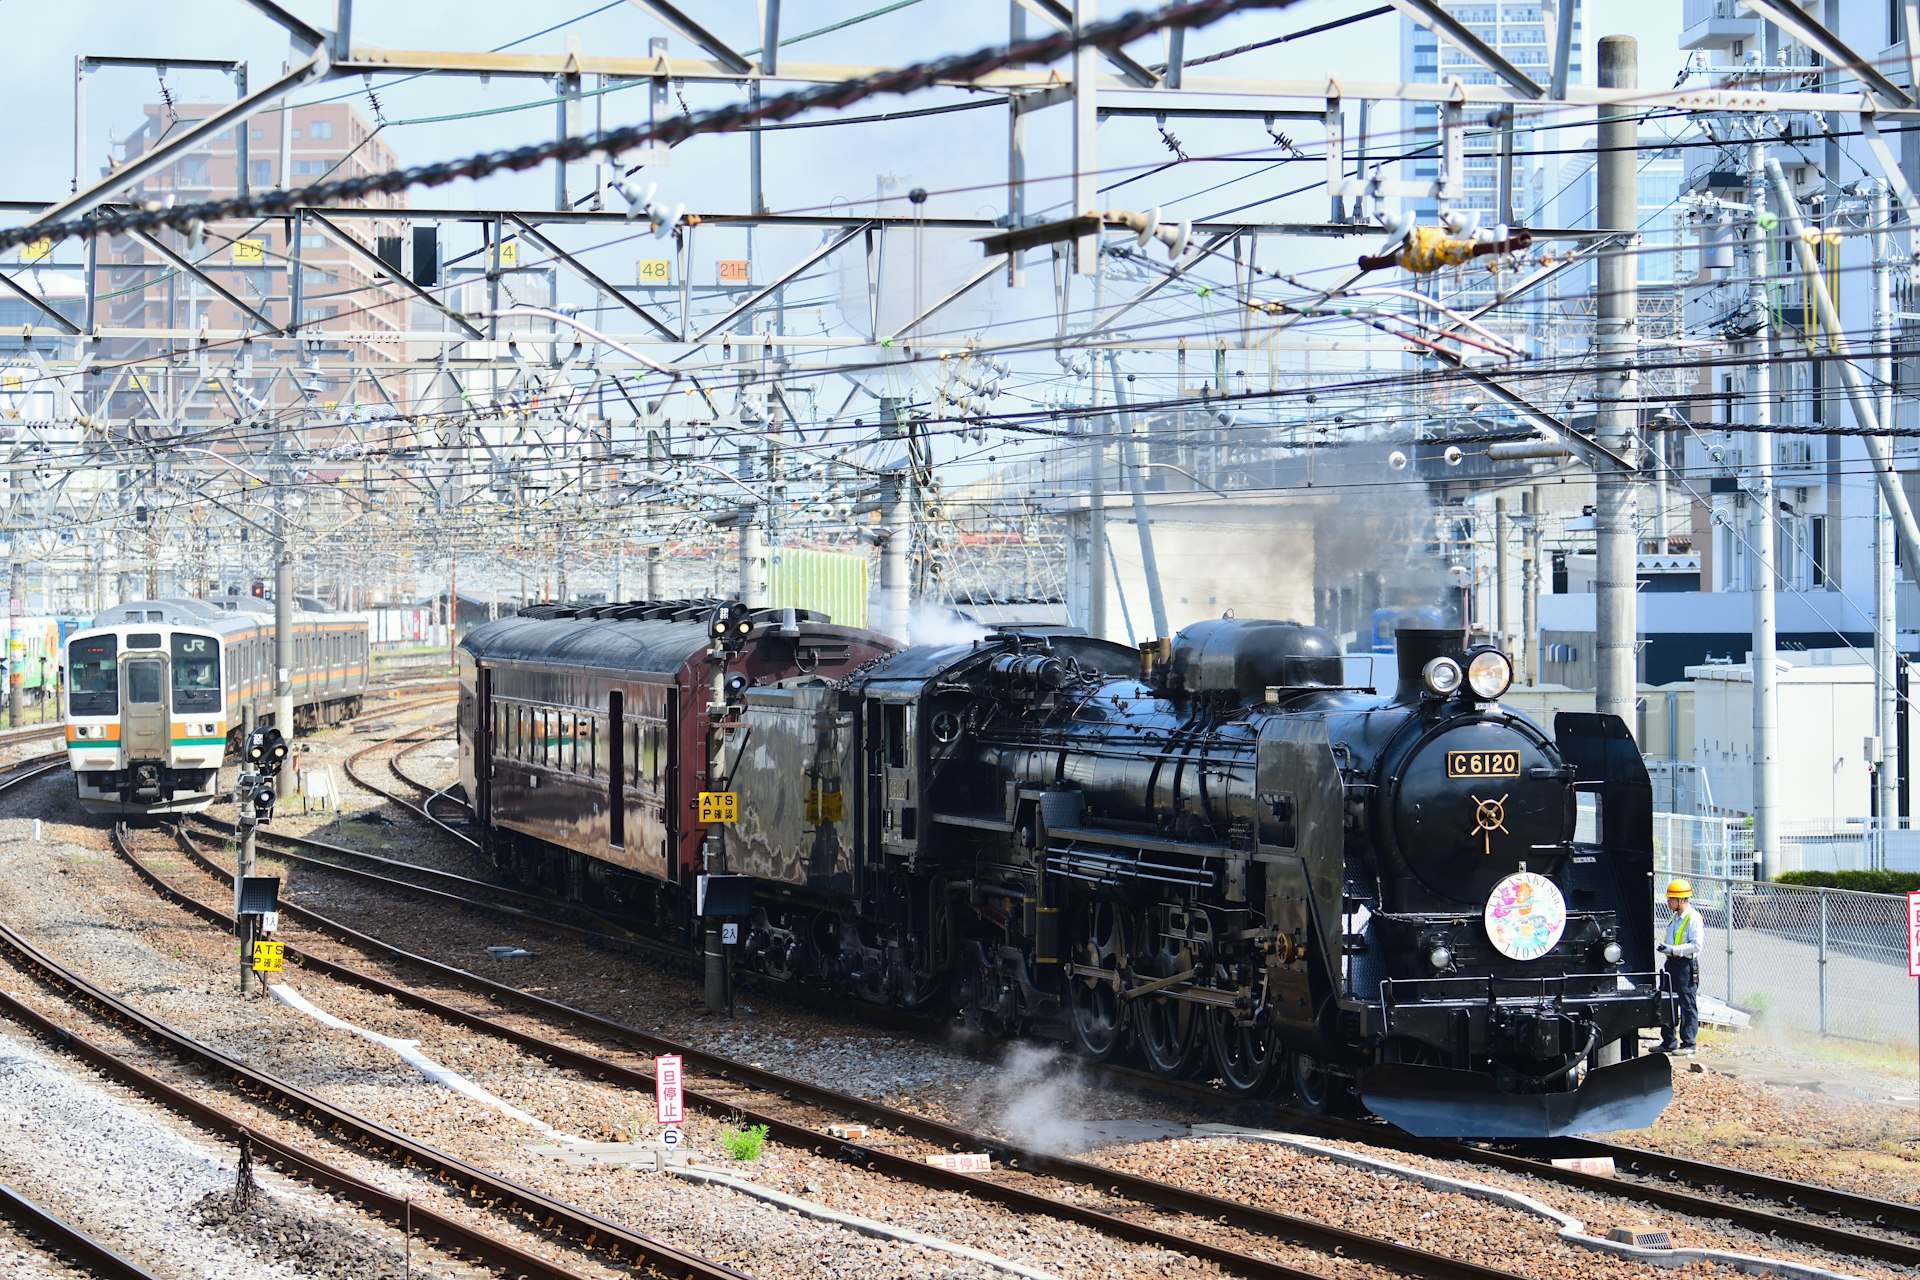 A C61 steam locomotive pulls an old Japan Railways train, Takasaki Rolling Stock Center, Takasaki, Gunma, Japan